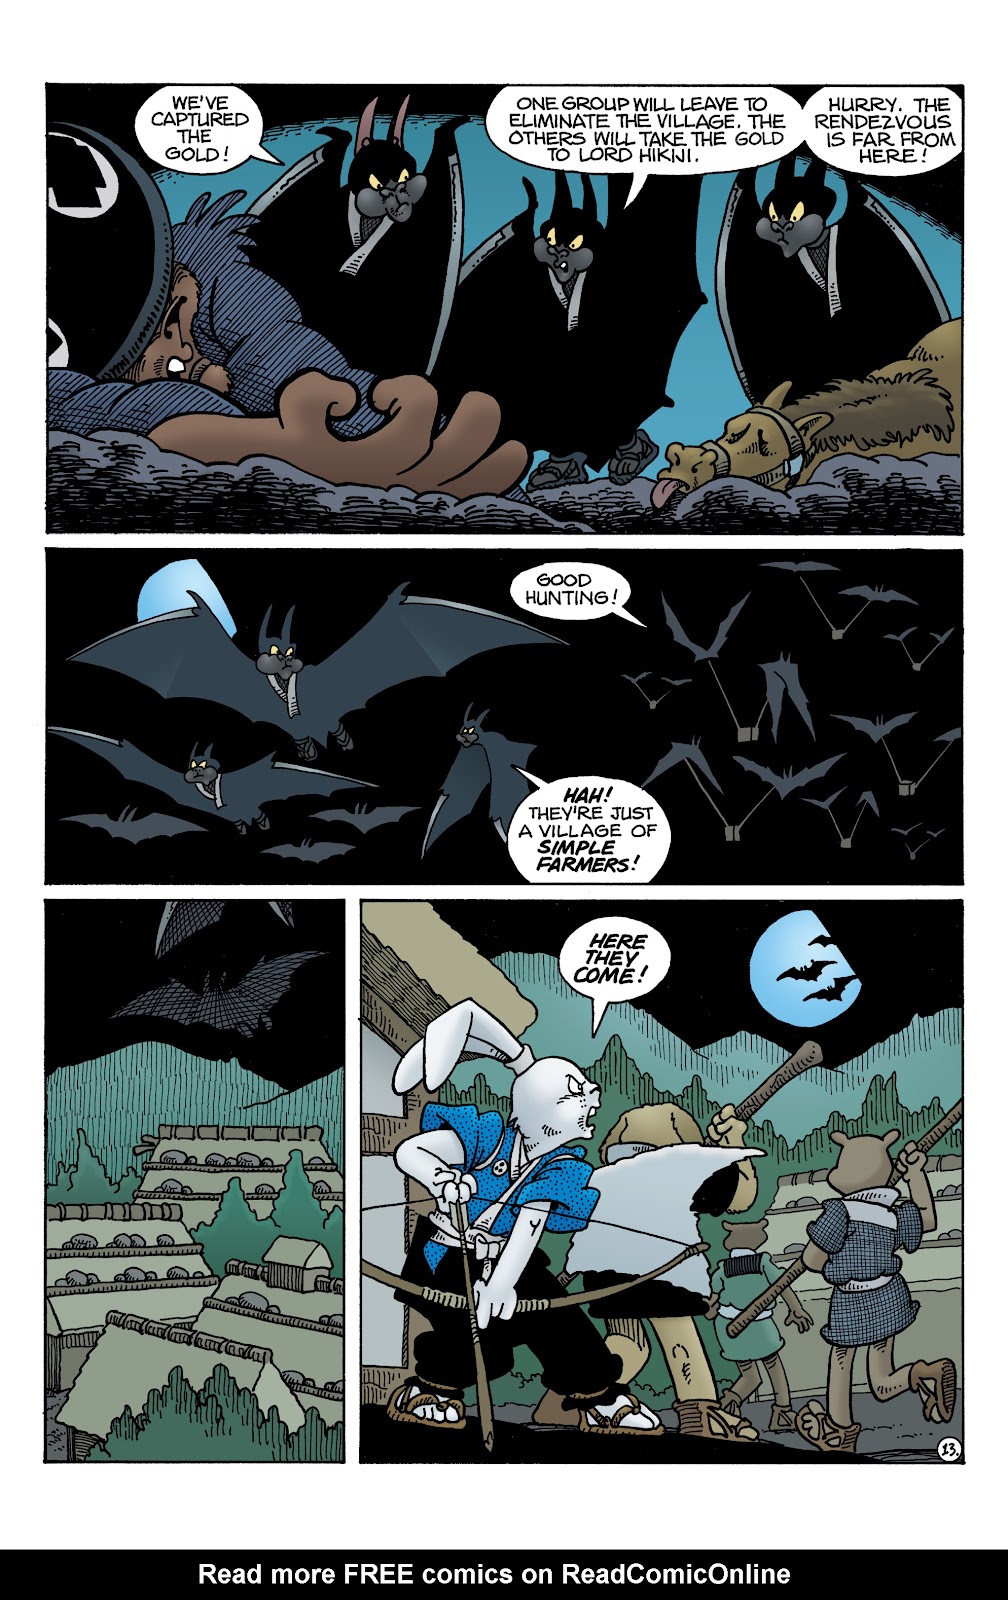 Usagi Yojimbo: Lone Goat and Kid issue 4 - Page 15